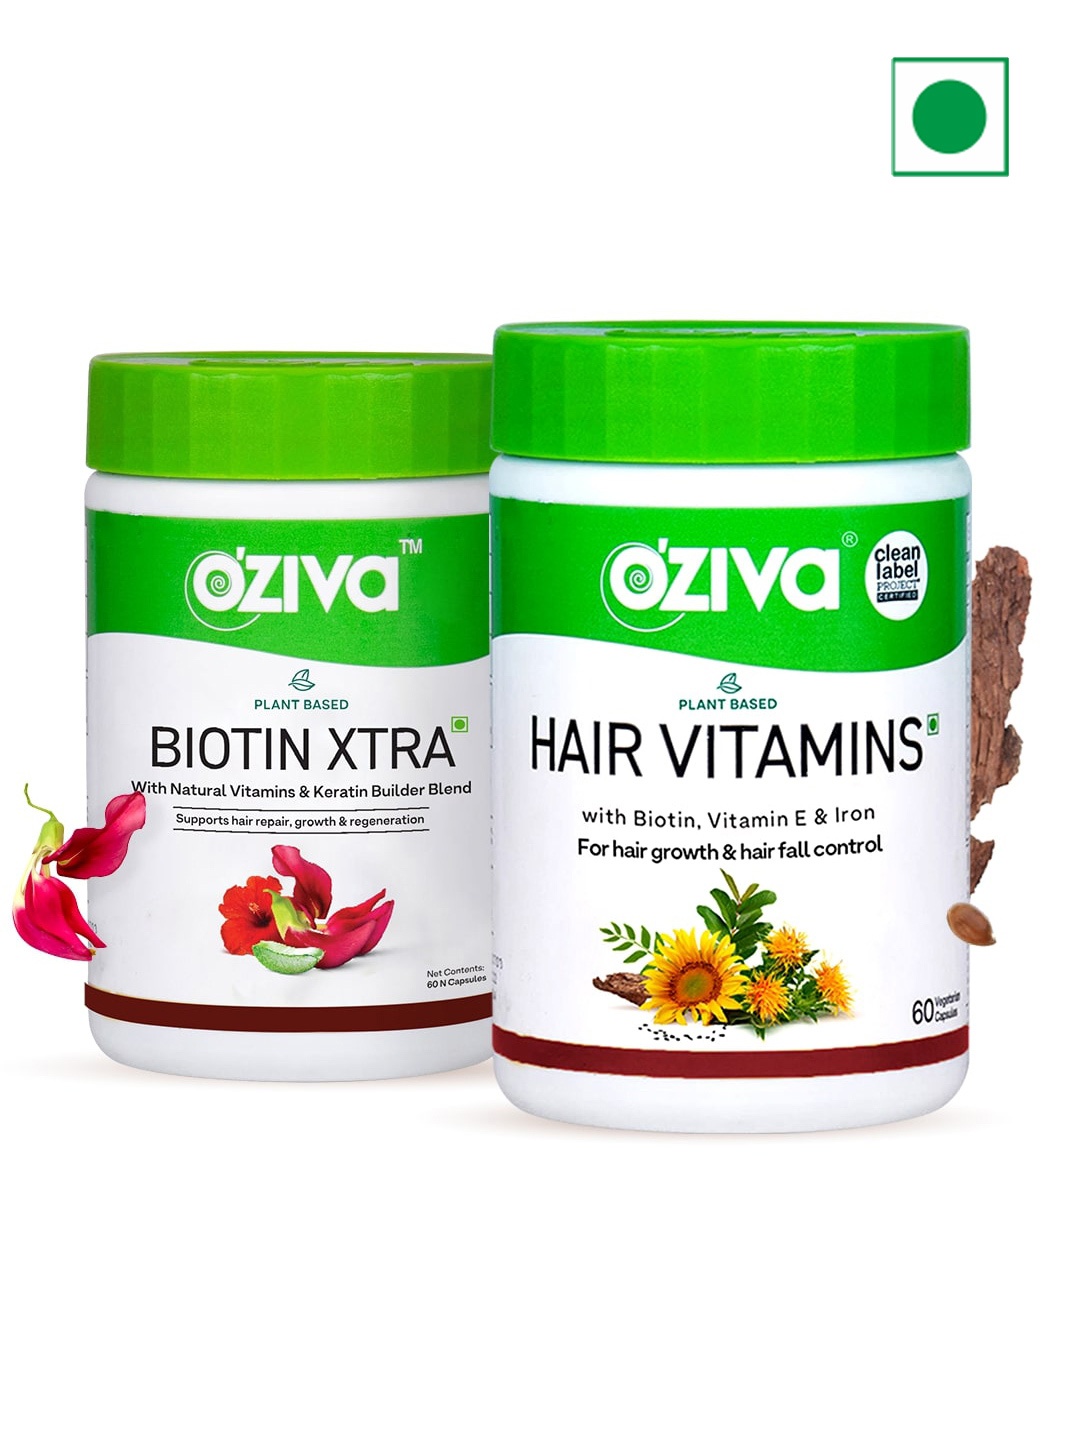 

OZiva Set of Biotin Xtra & Hair Vitamins - 60 Capsules Each, Green